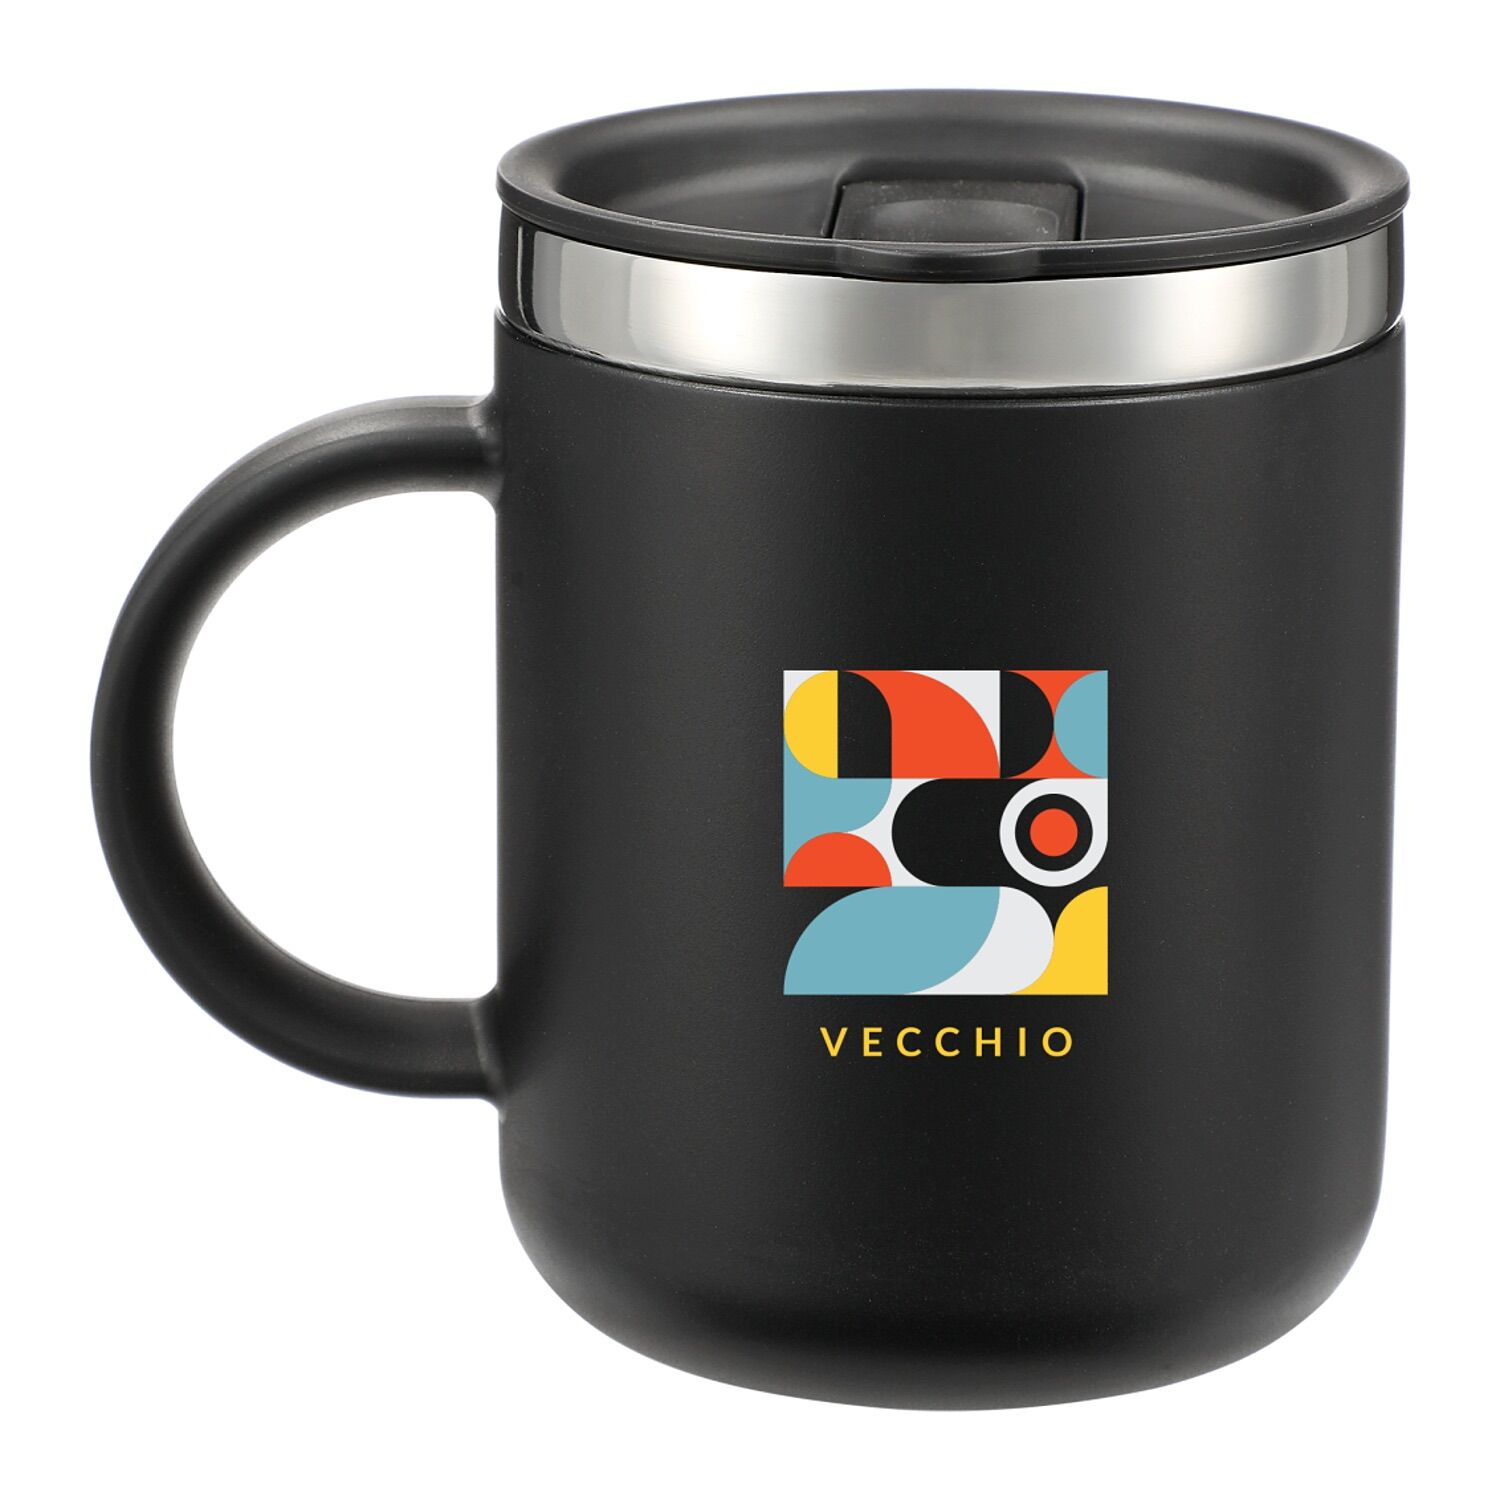 https://www.drivemerch.com/wp-content/uploads/2022/08/branded-hydro-flask-coffee-mug-12-oz-black.jpg